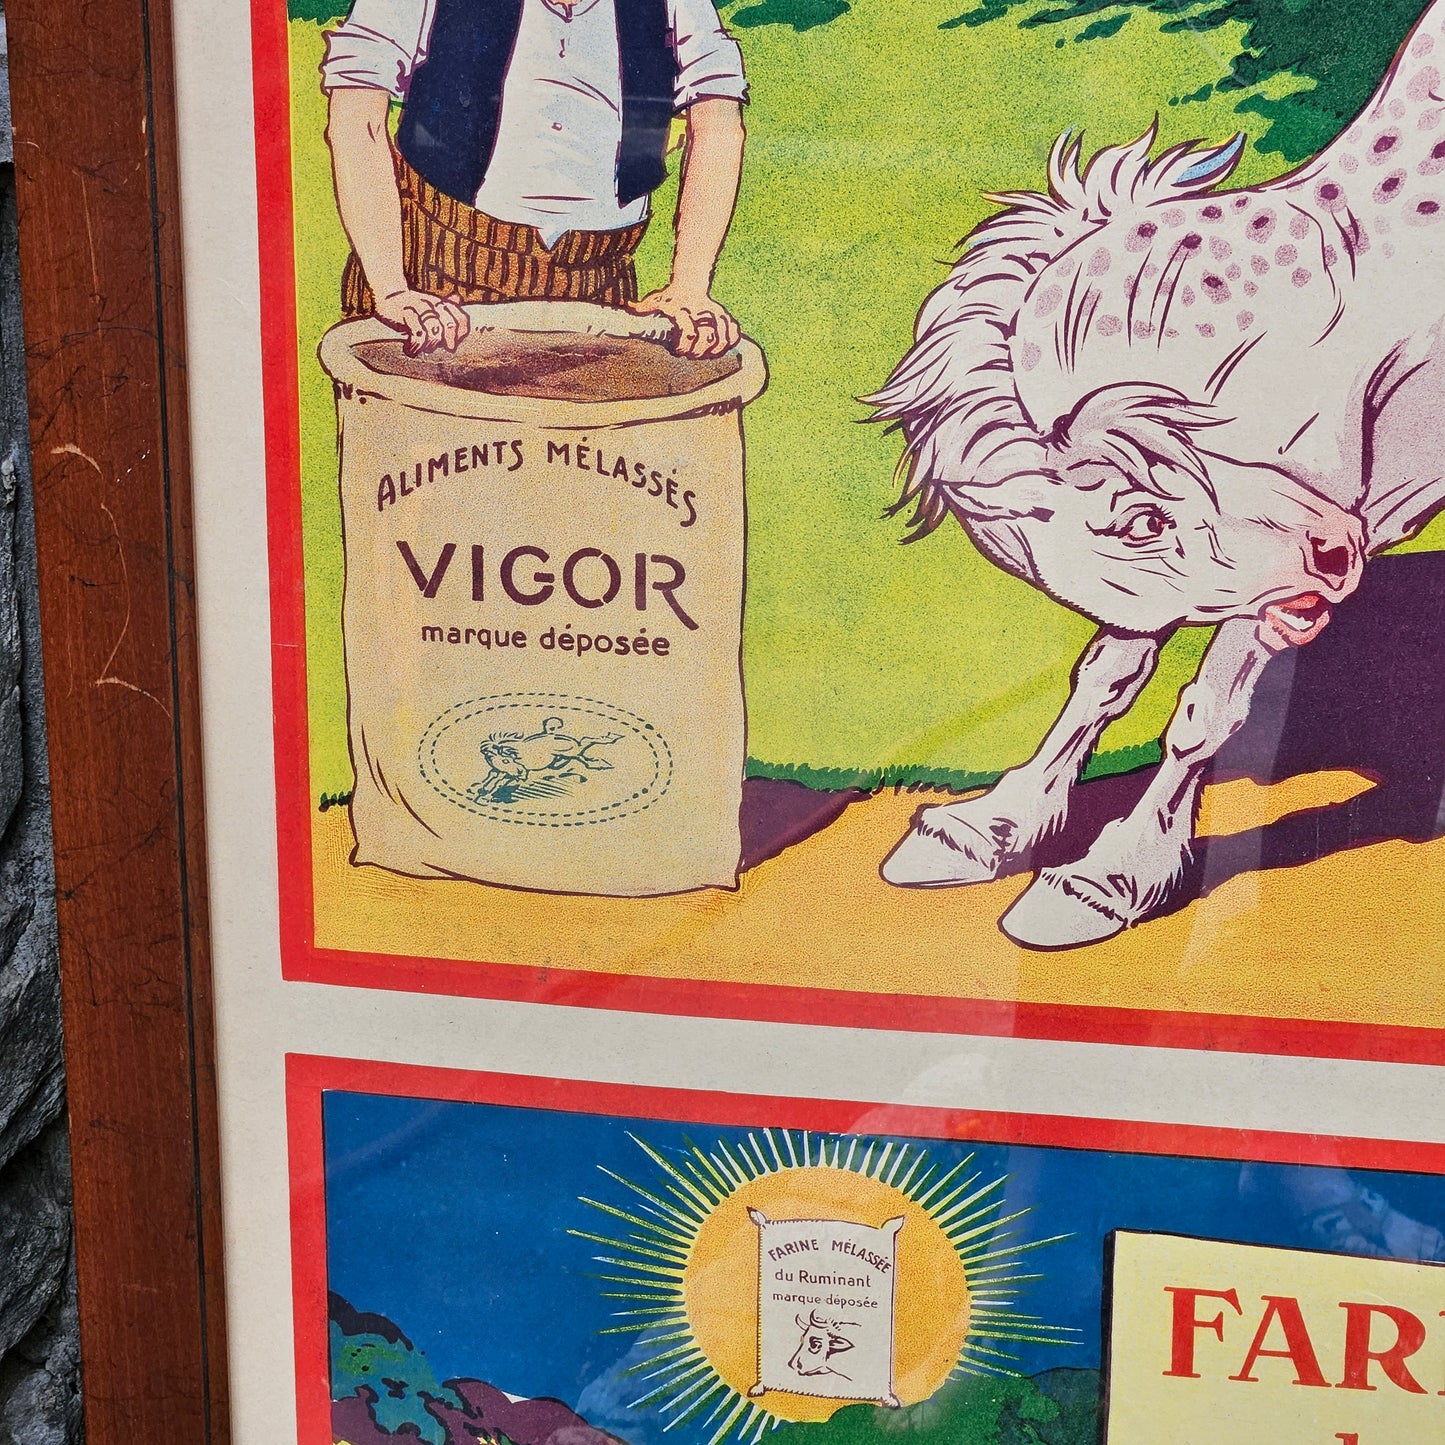 Large Vintage French Vigor Poster